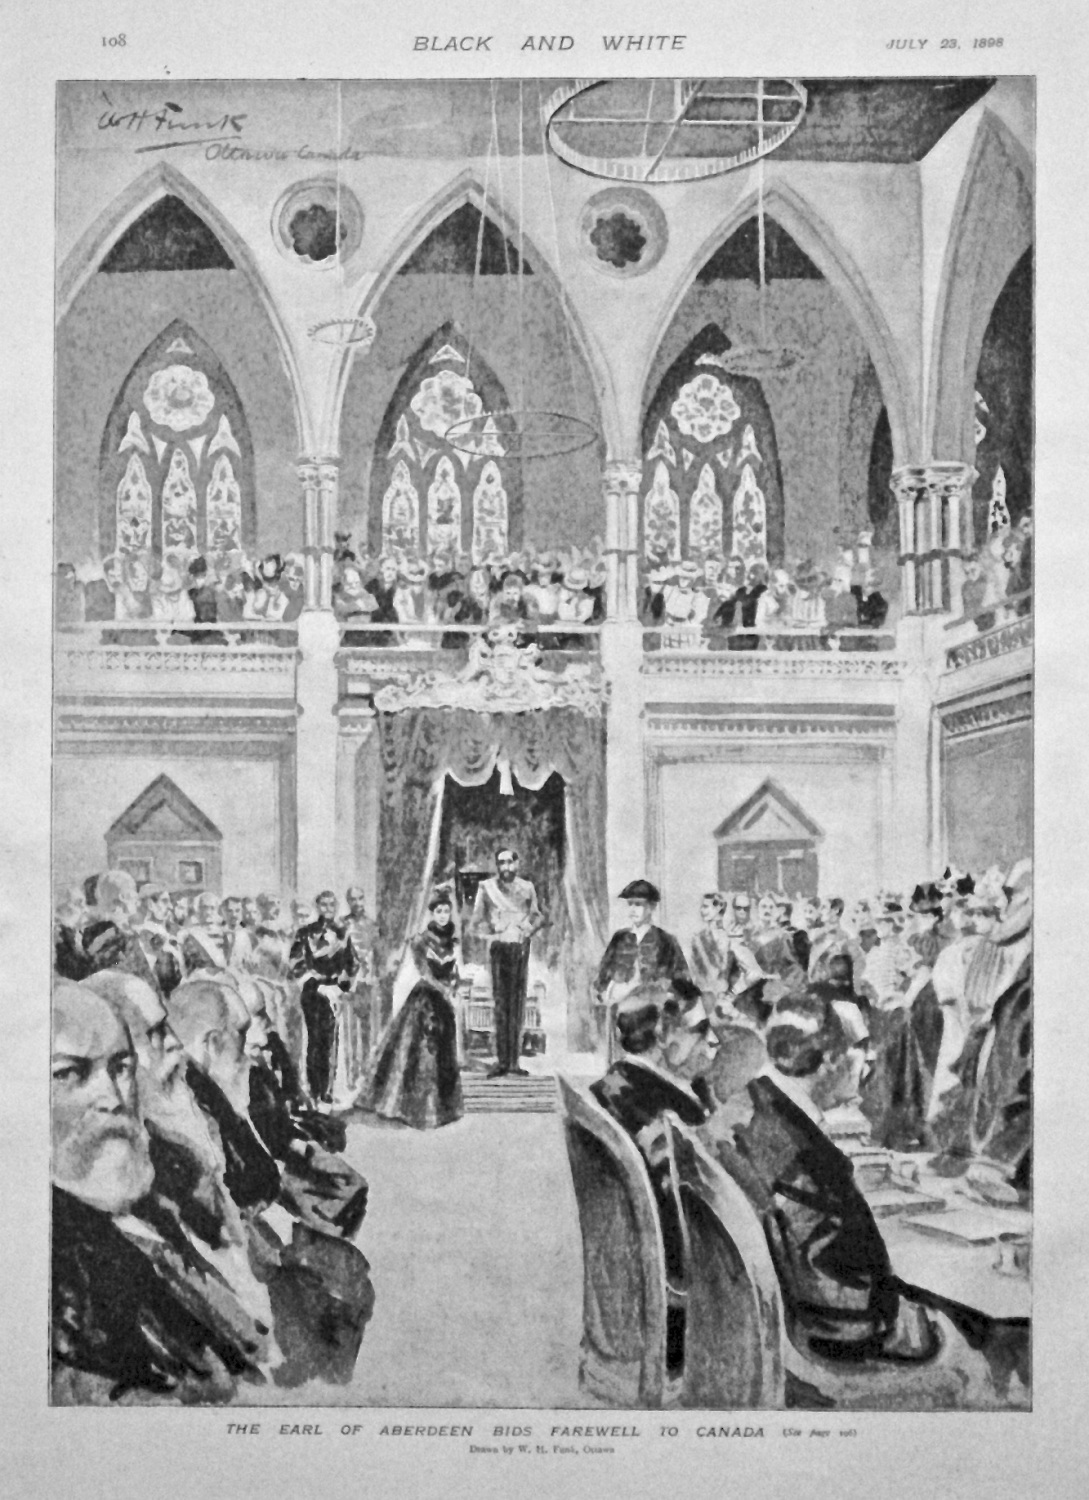 The Earl of Aberdeen Bids Farewell to Canada. 1898.